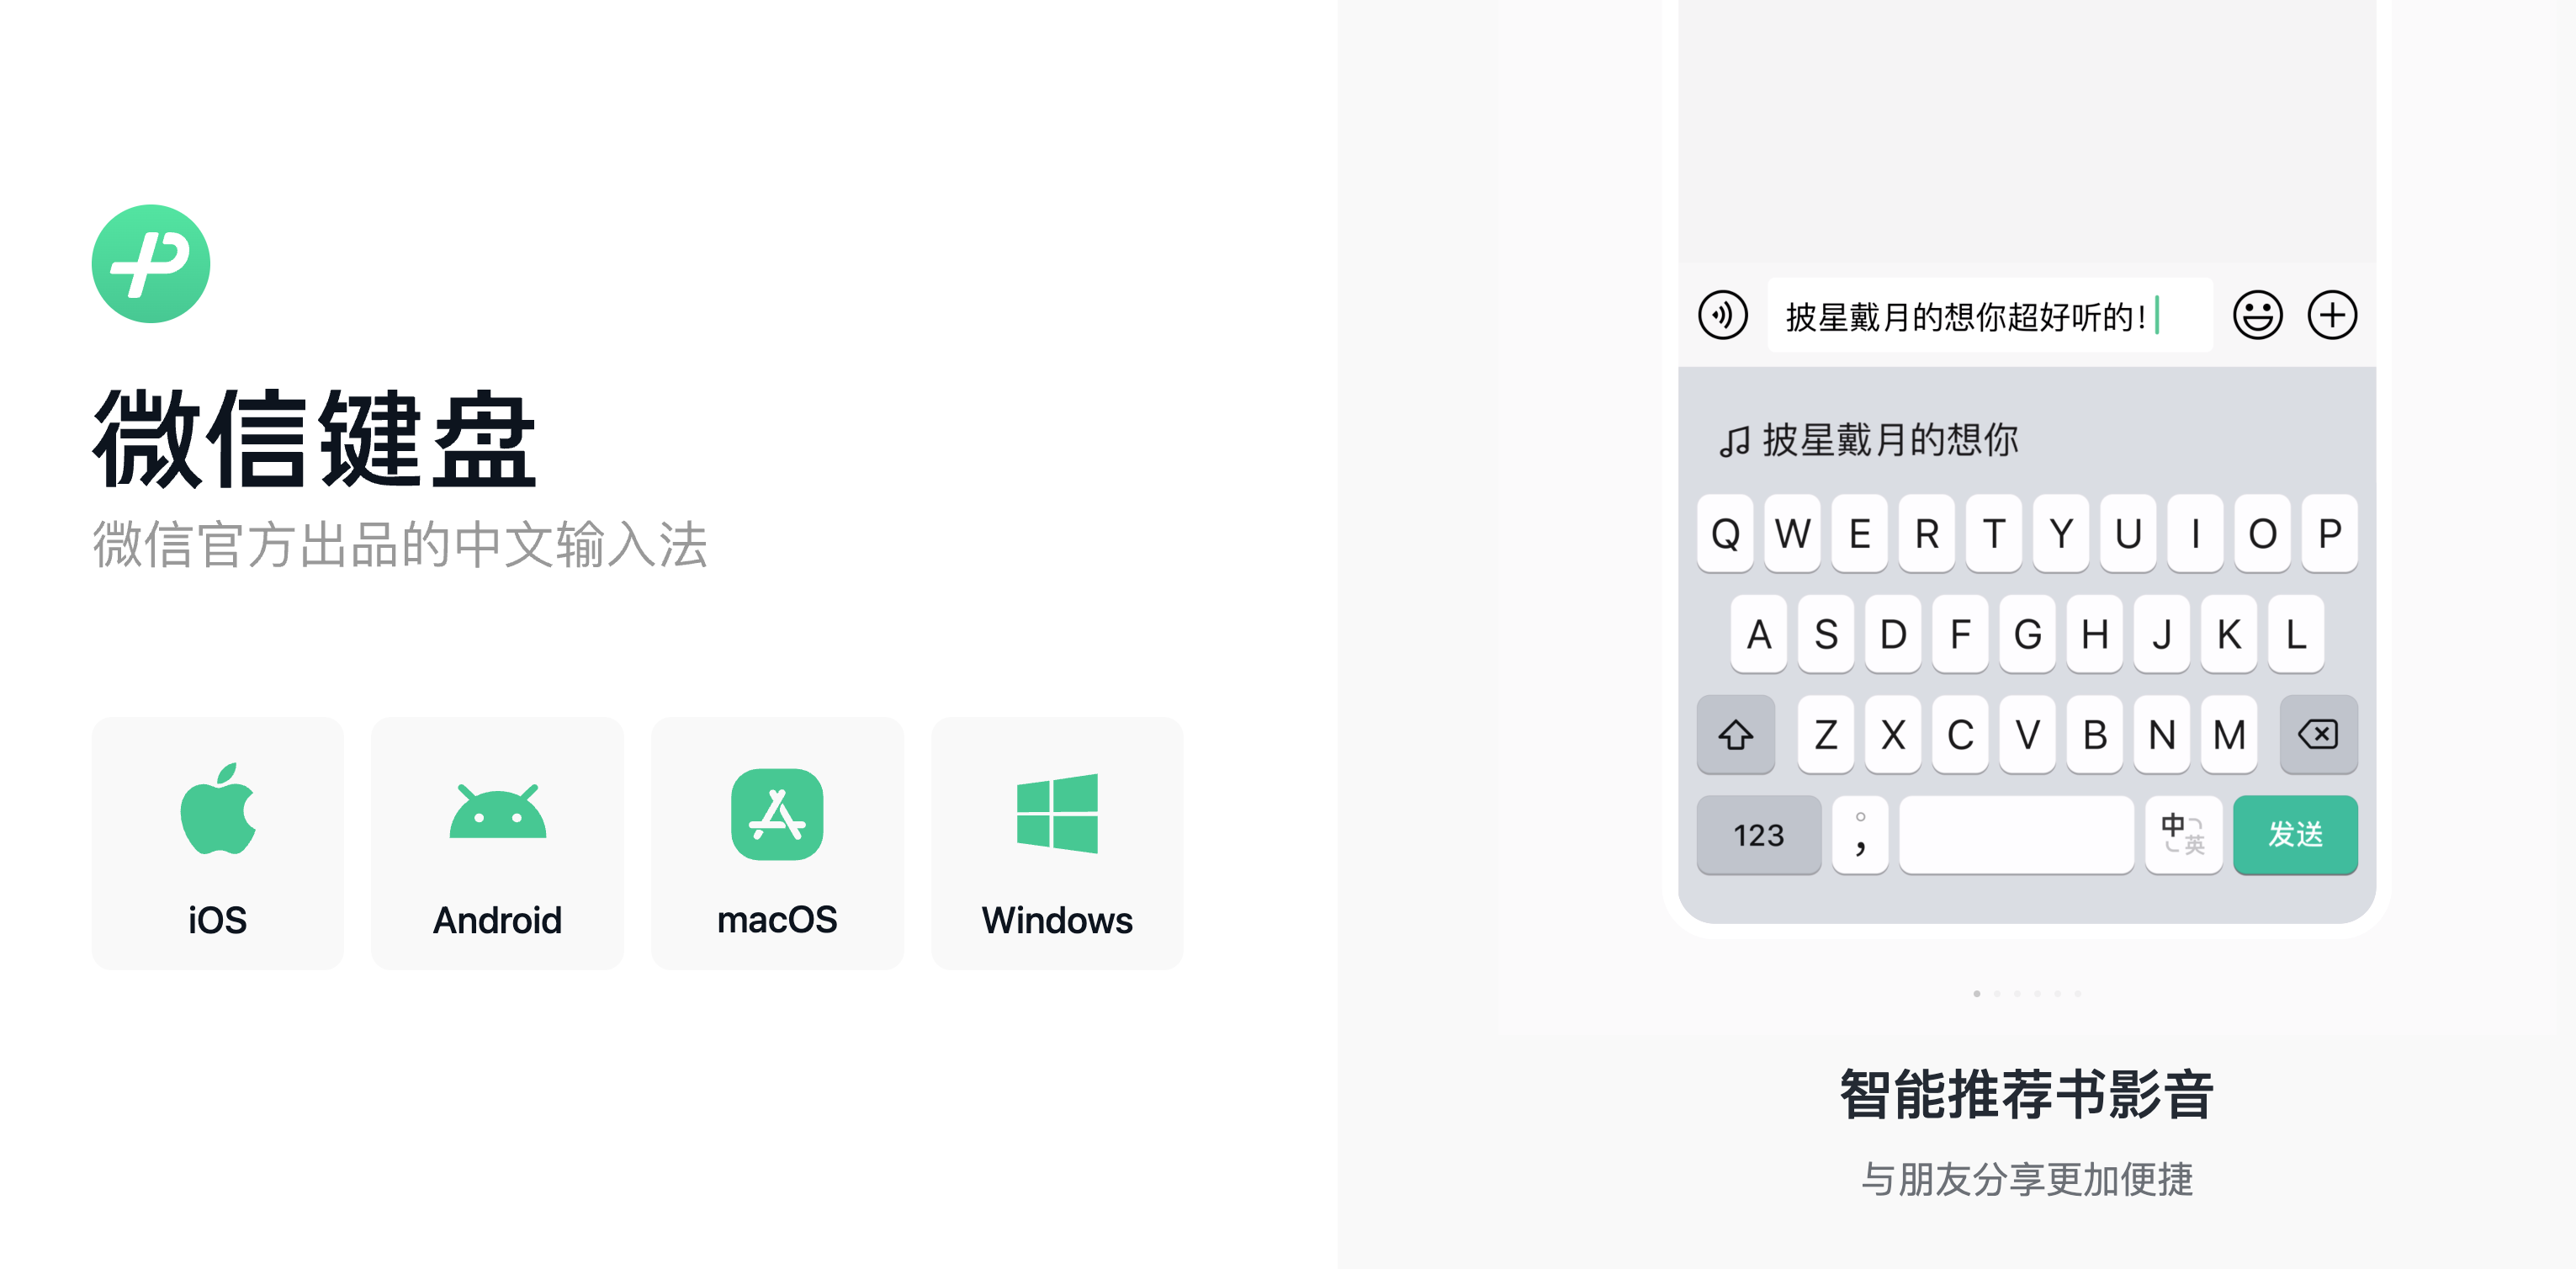 微信键盘输入法 for mac v0.9.0 微信官方出品的中文输入法